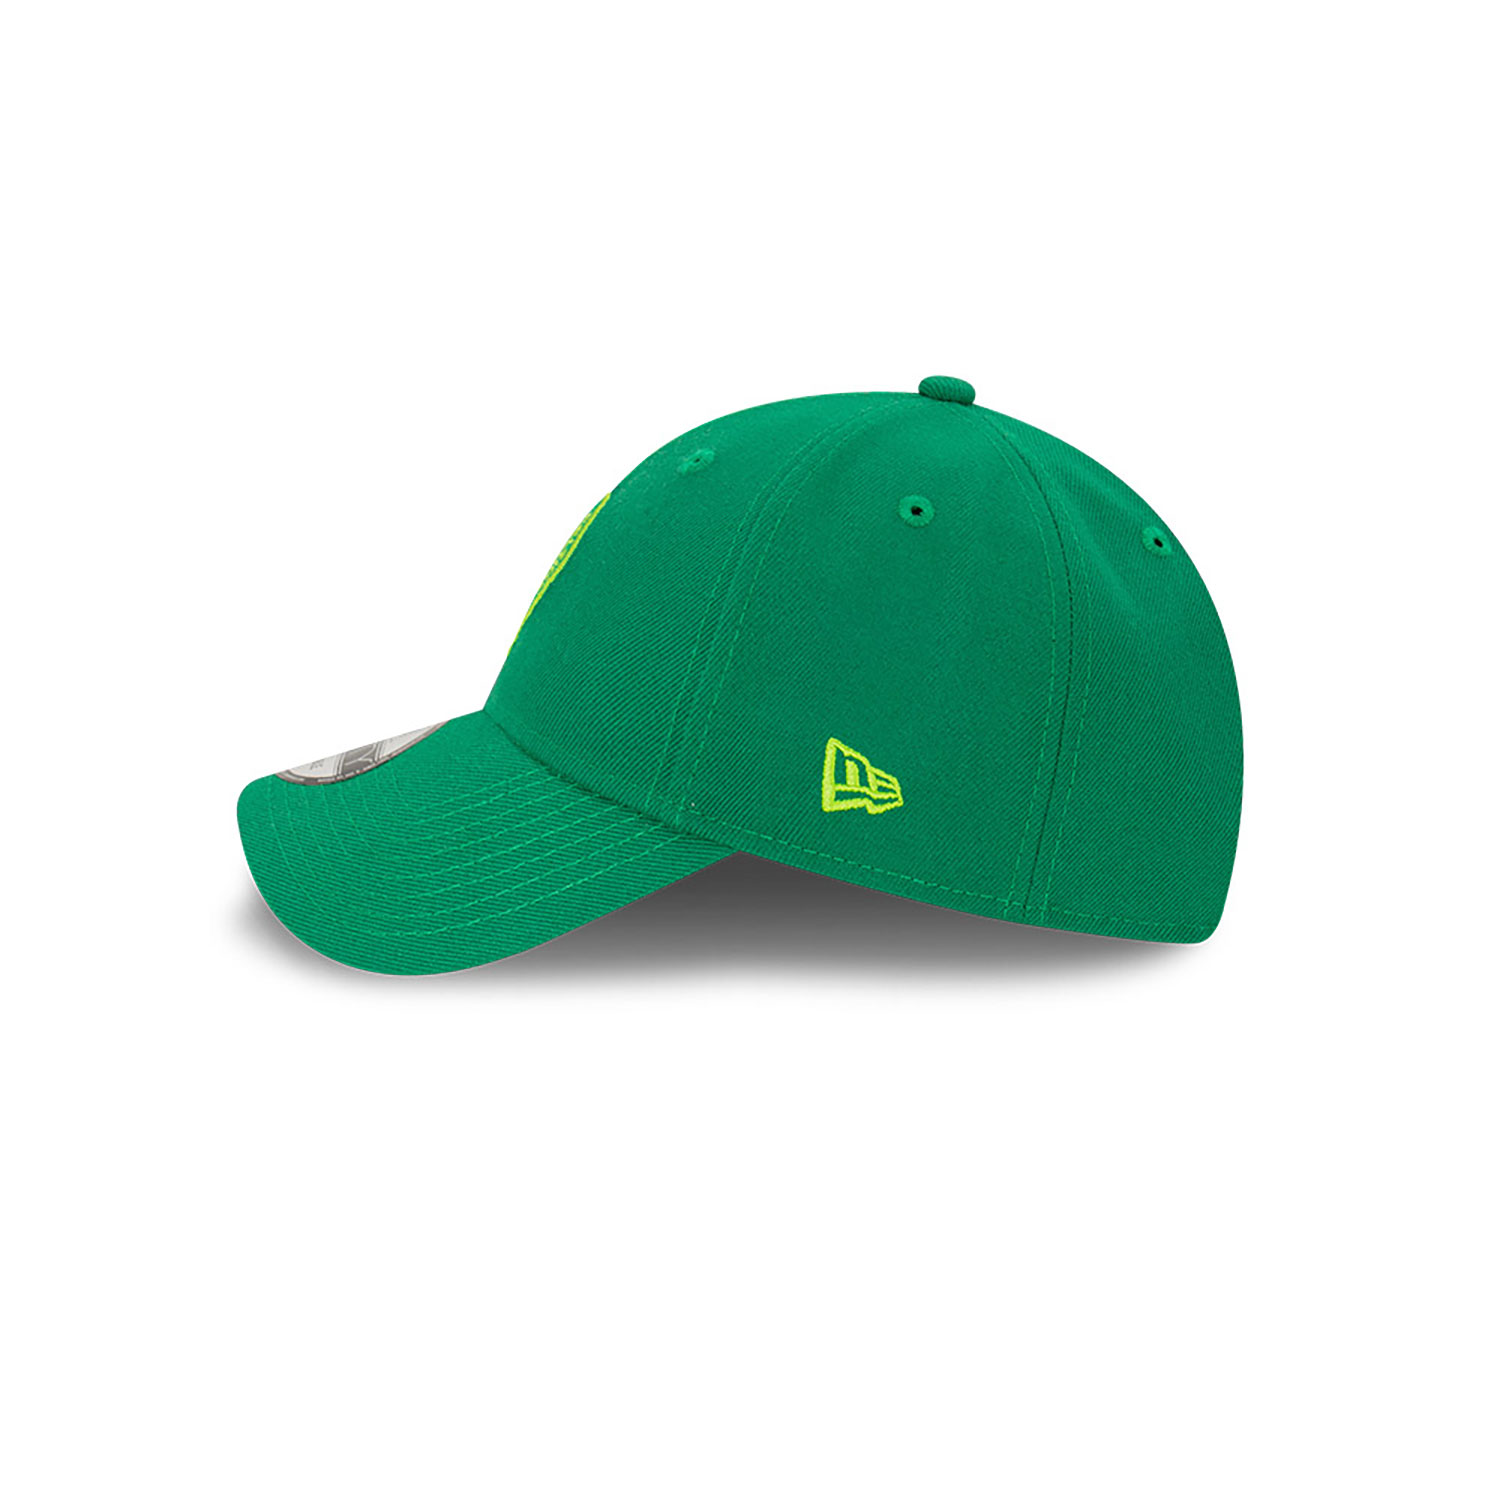 Boston Celtics Monochrome Green 9FORTY Adjustable Cap